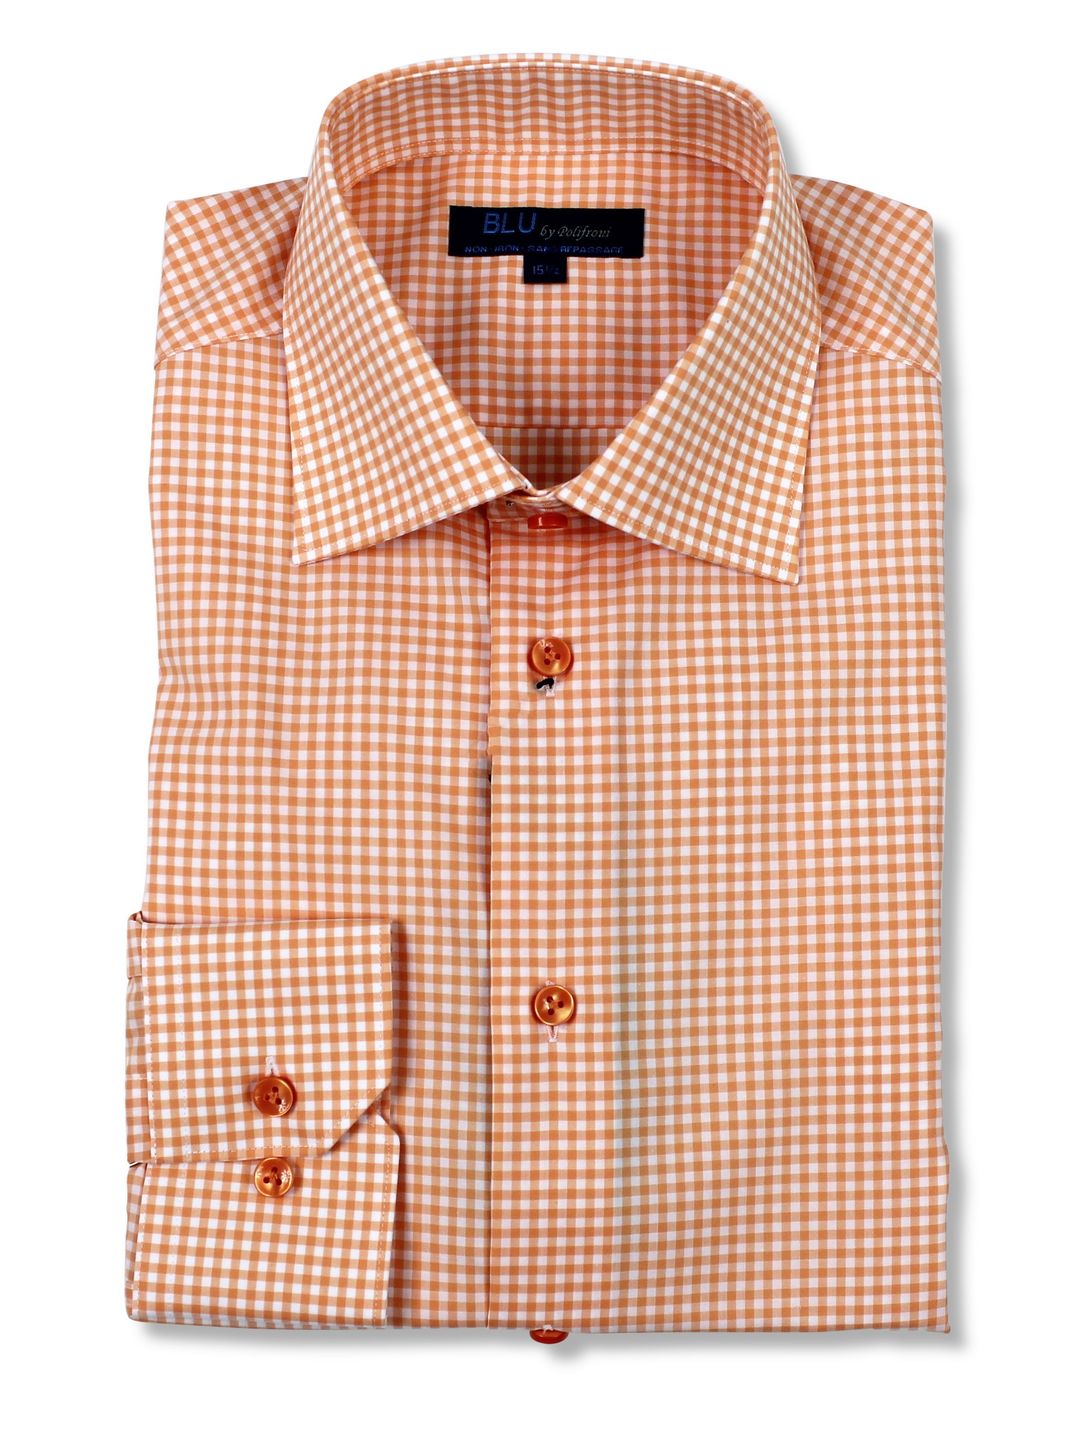 Blu by Polifroni Orange Check Dress Shirt